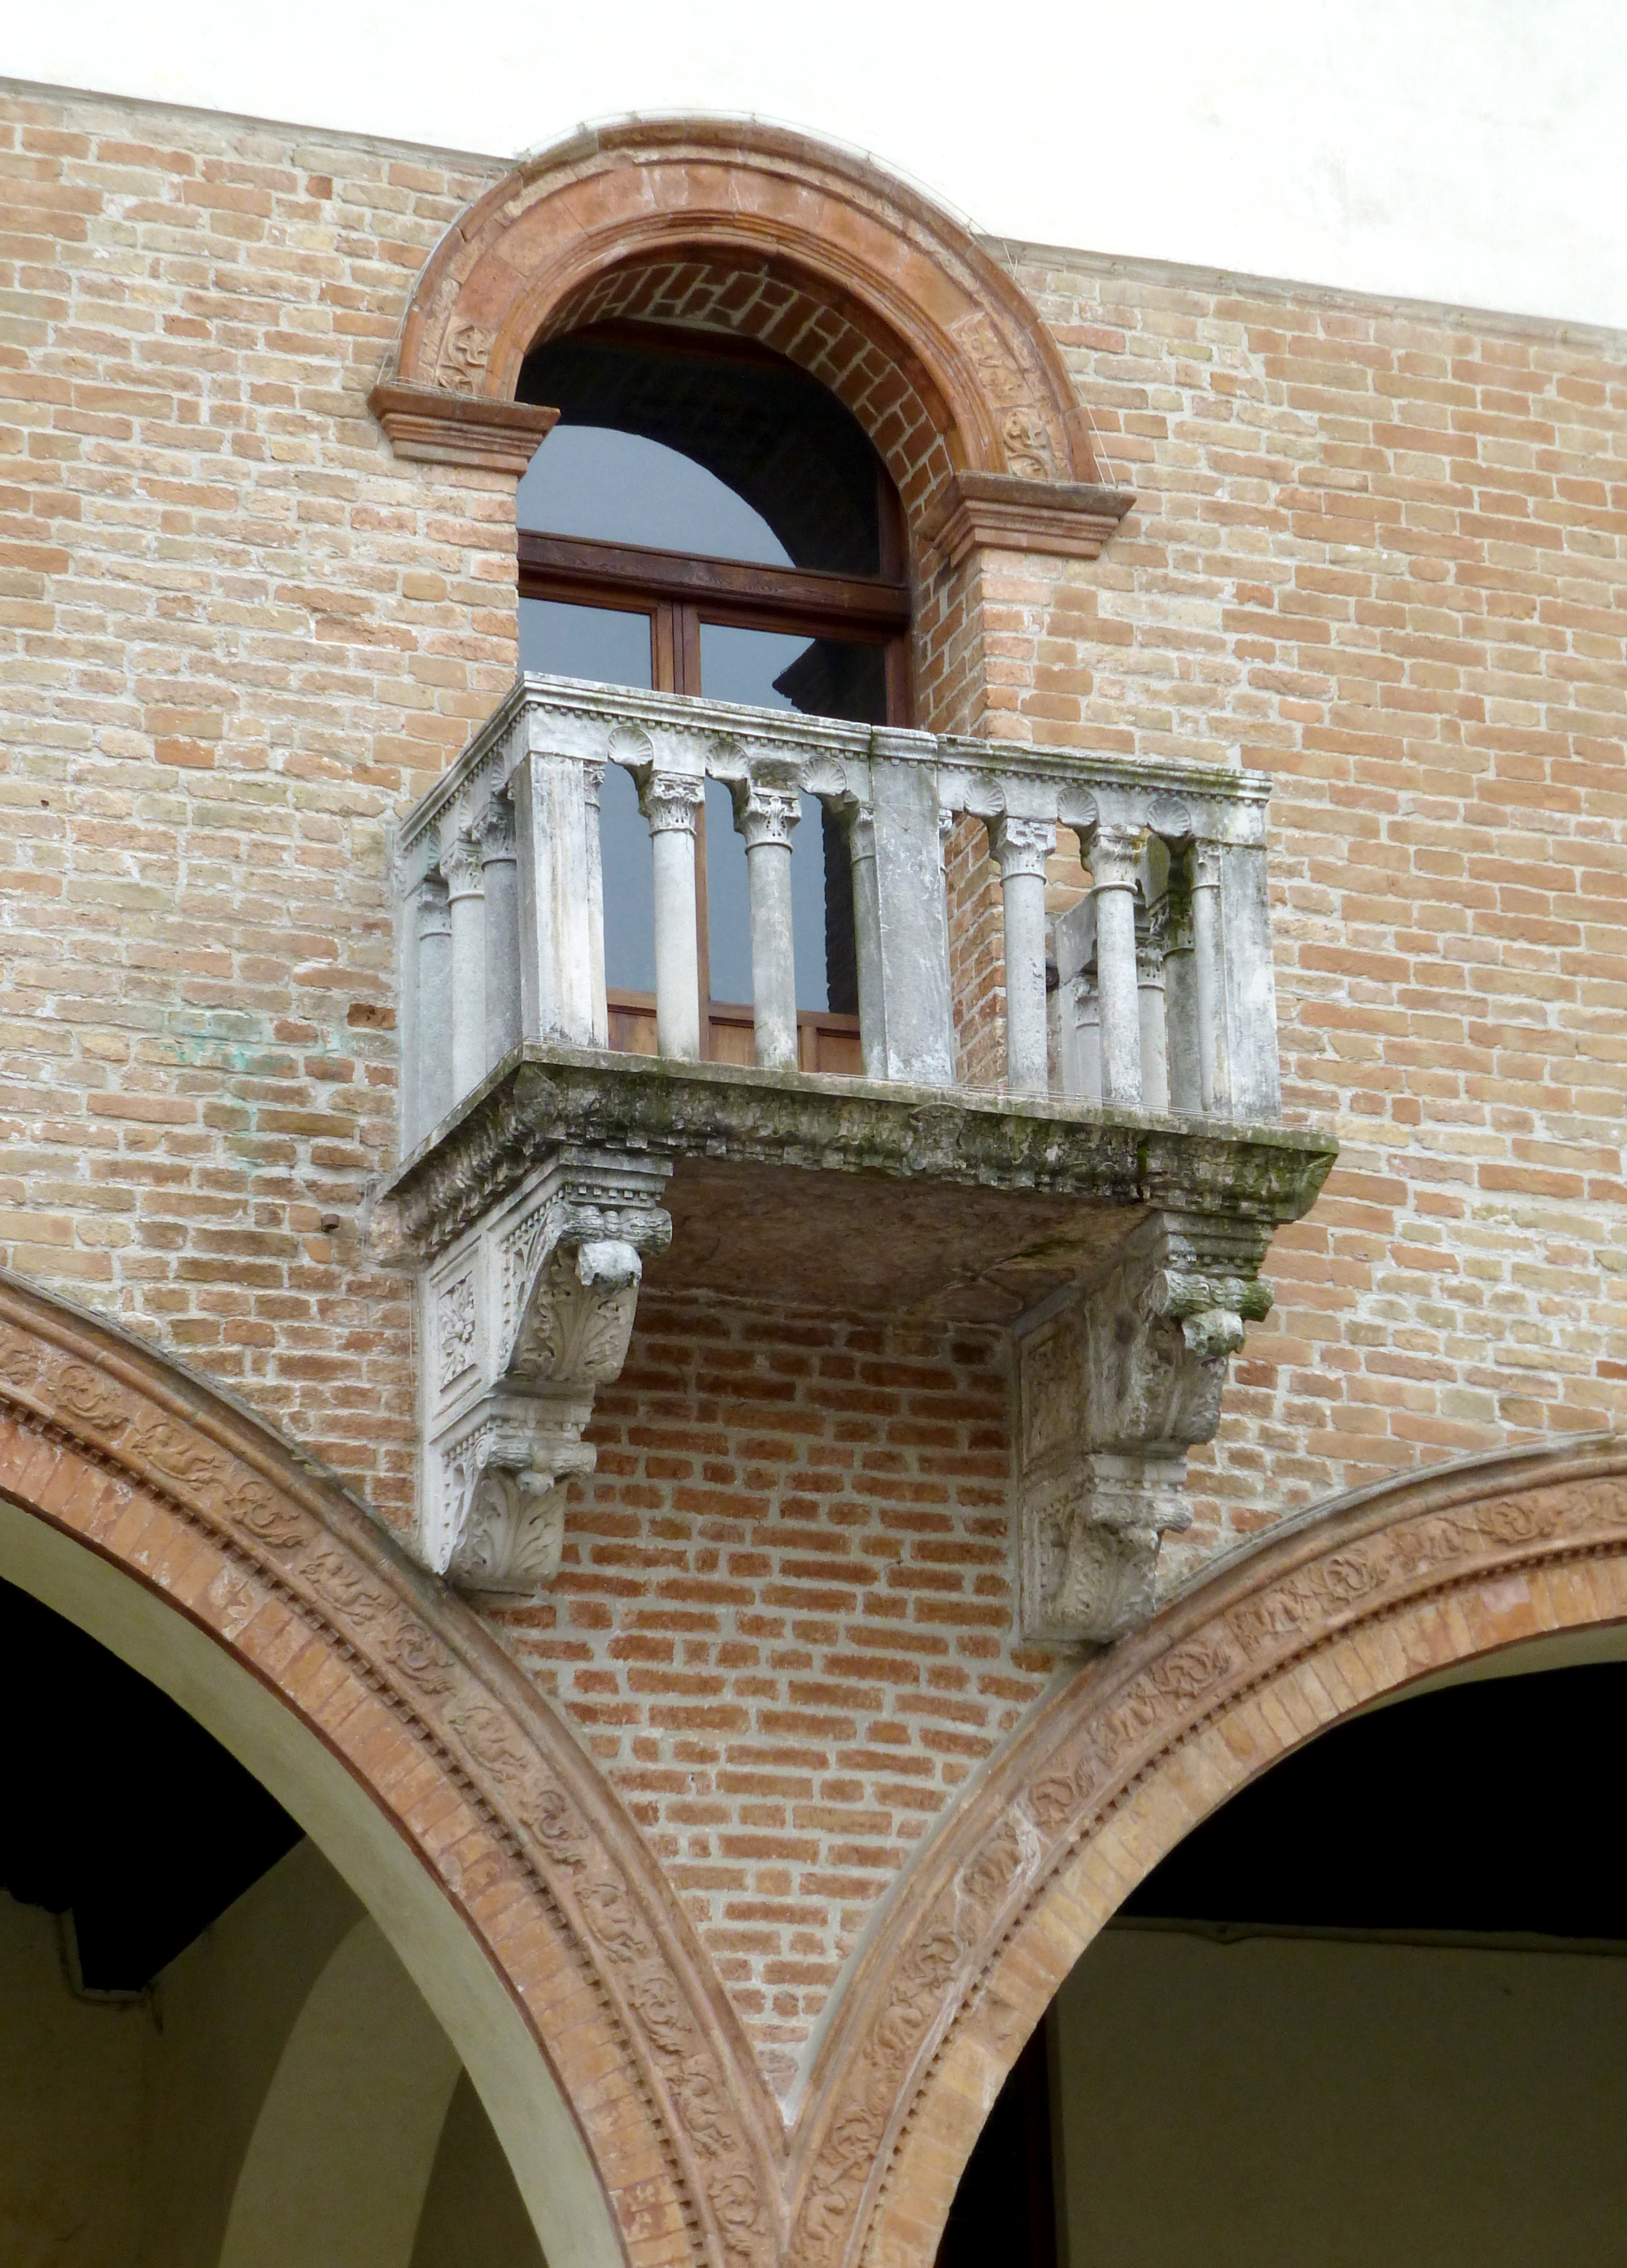 photo: https://upload.wikimedia.org/wikipedia/commons/b/b3/Piazza_del_Popolo_e_Residenza_Comunale_-_039014204-MIBAC.JPG